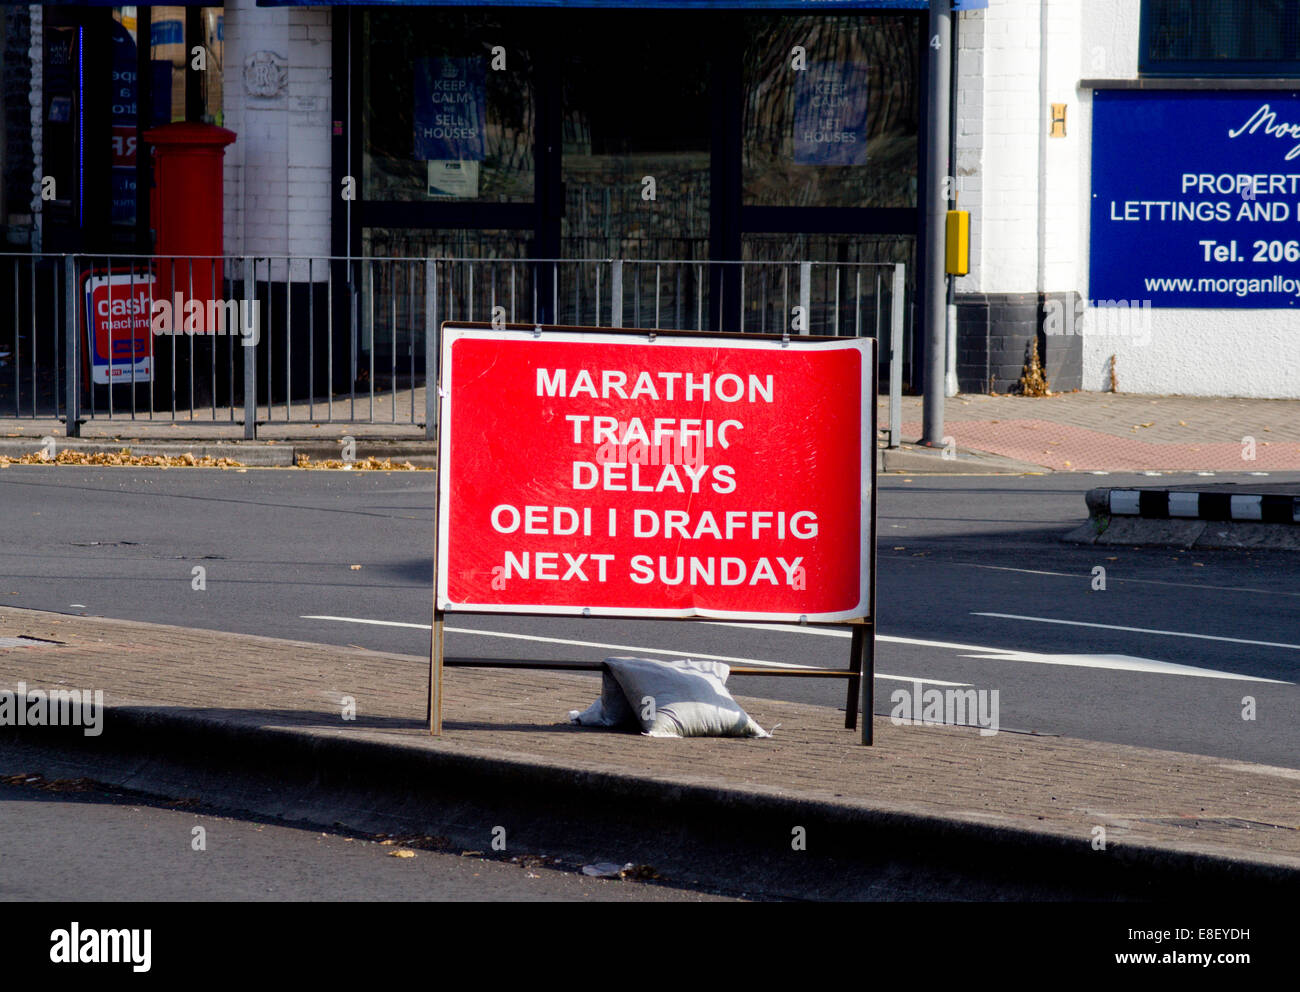 Sign warning motorists of traffic delays due to Marathon Race, Cardiff, Wales. Stock Photo